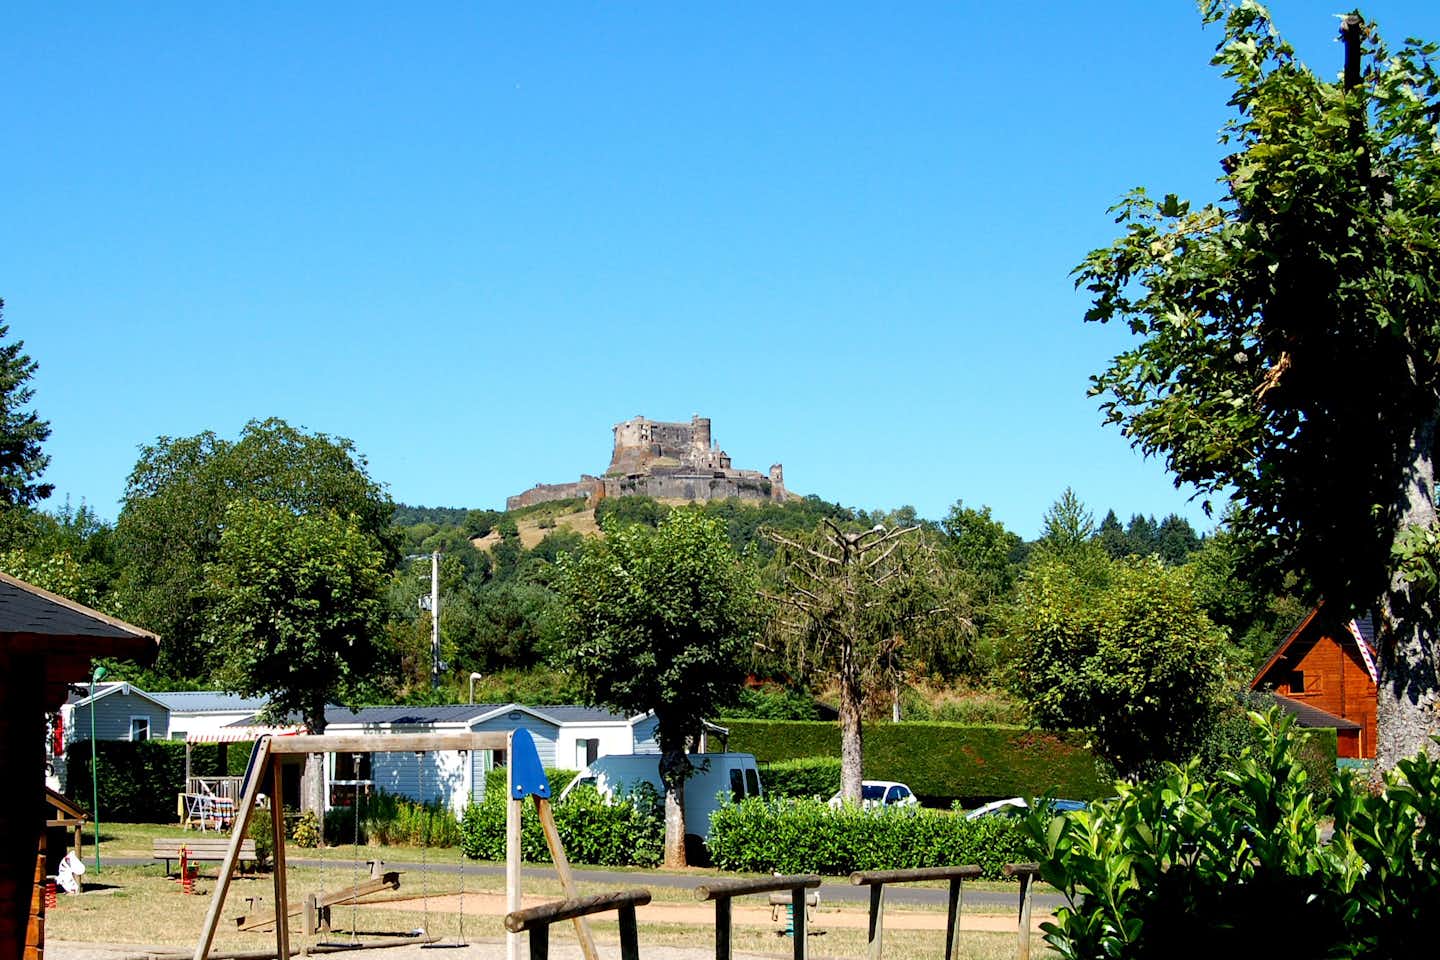 Camping Le Repos du Baladin  -  Campingplatz im Parc naturel régional des Volcans d'Auvergne mit Blick auf die Burg Murol